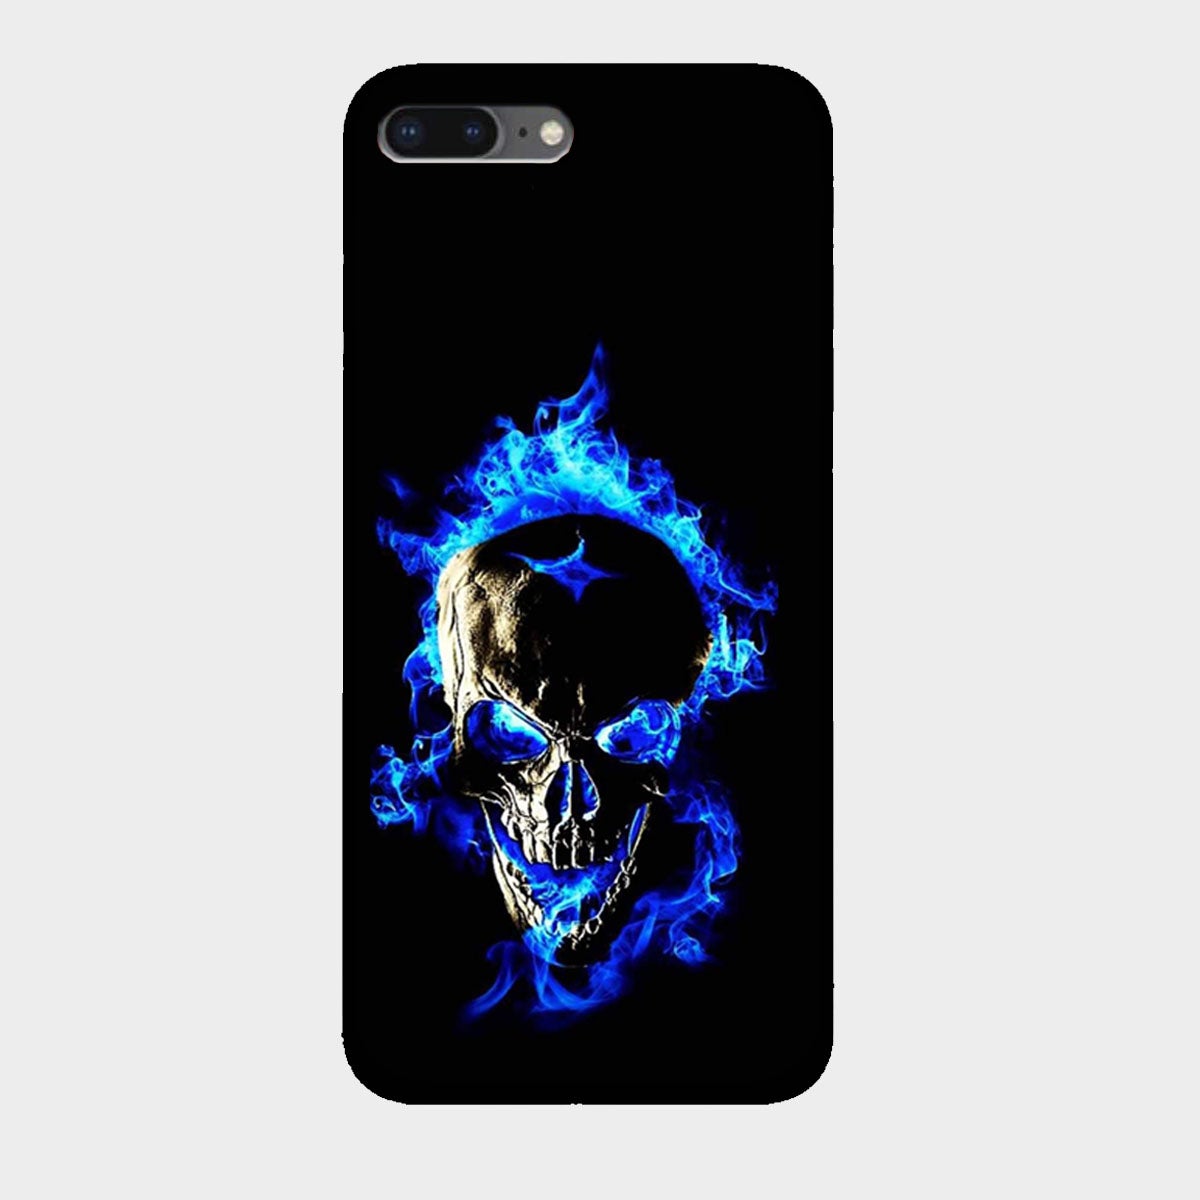 Skulls - Mobile Phone Cover - Hard Case